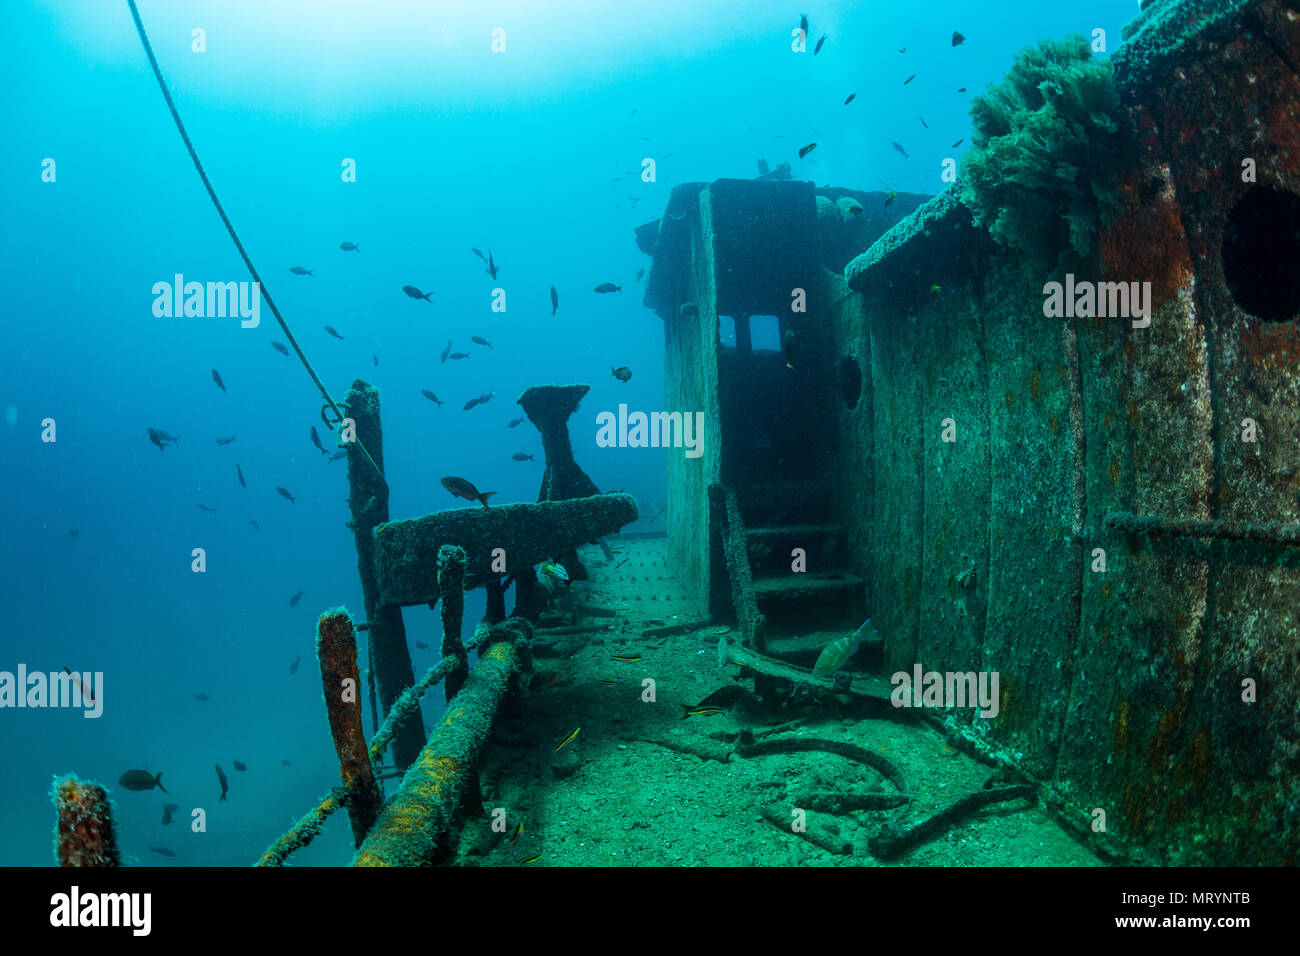 A view of a railing along the sunken Fang Ming shipwreck near La Paz, Mexico. Stock Photo